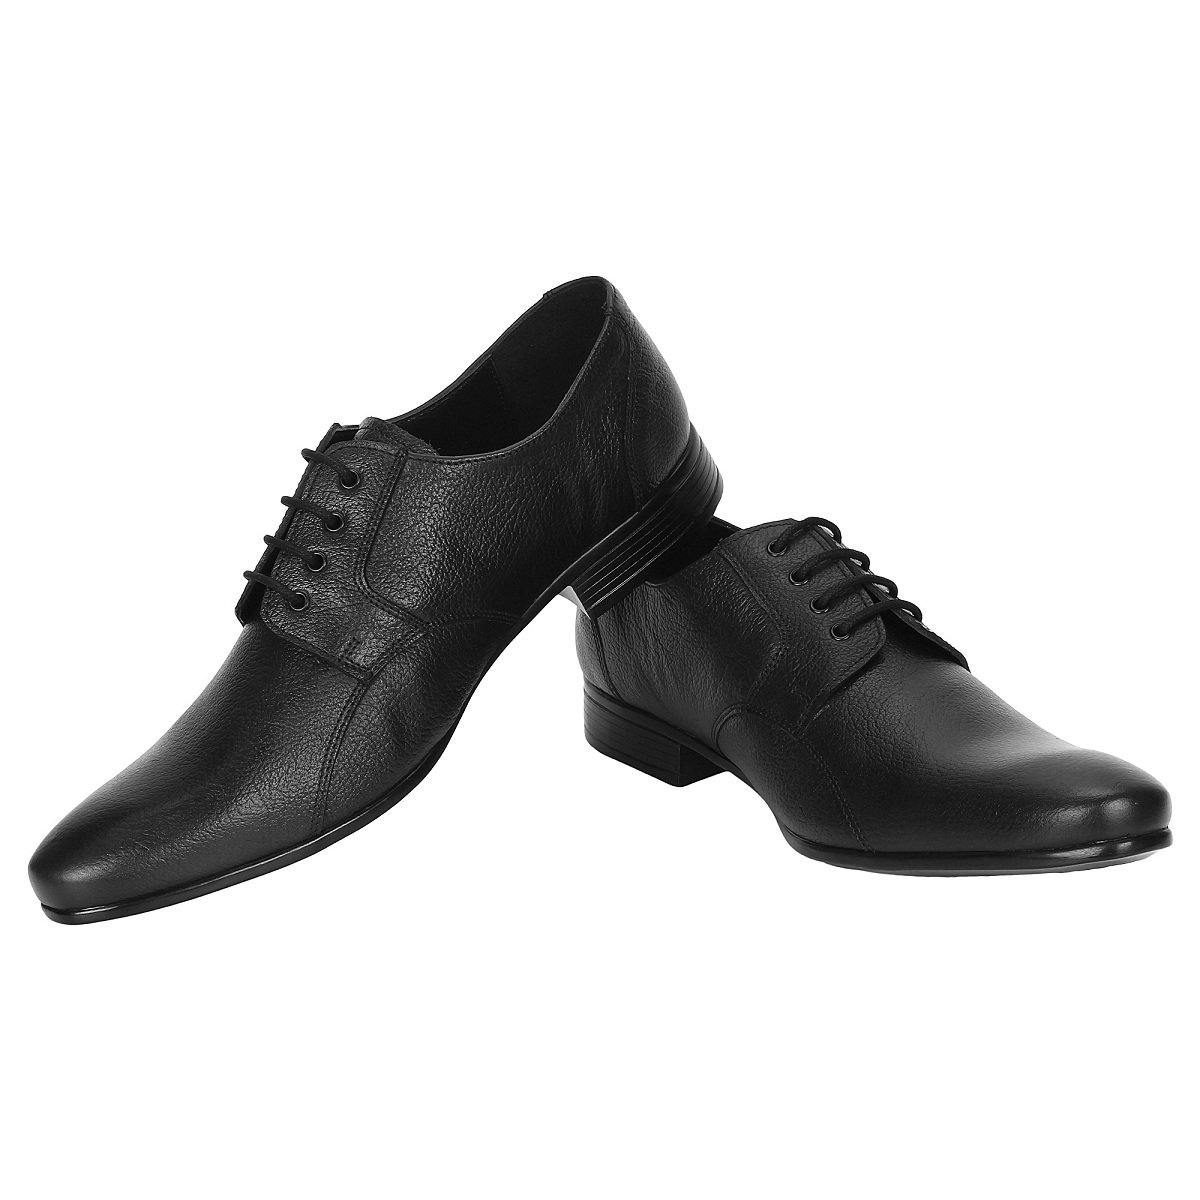 SeeandWear Black Formal Suit Shoes for Men - Minor Defect - SeeandWear